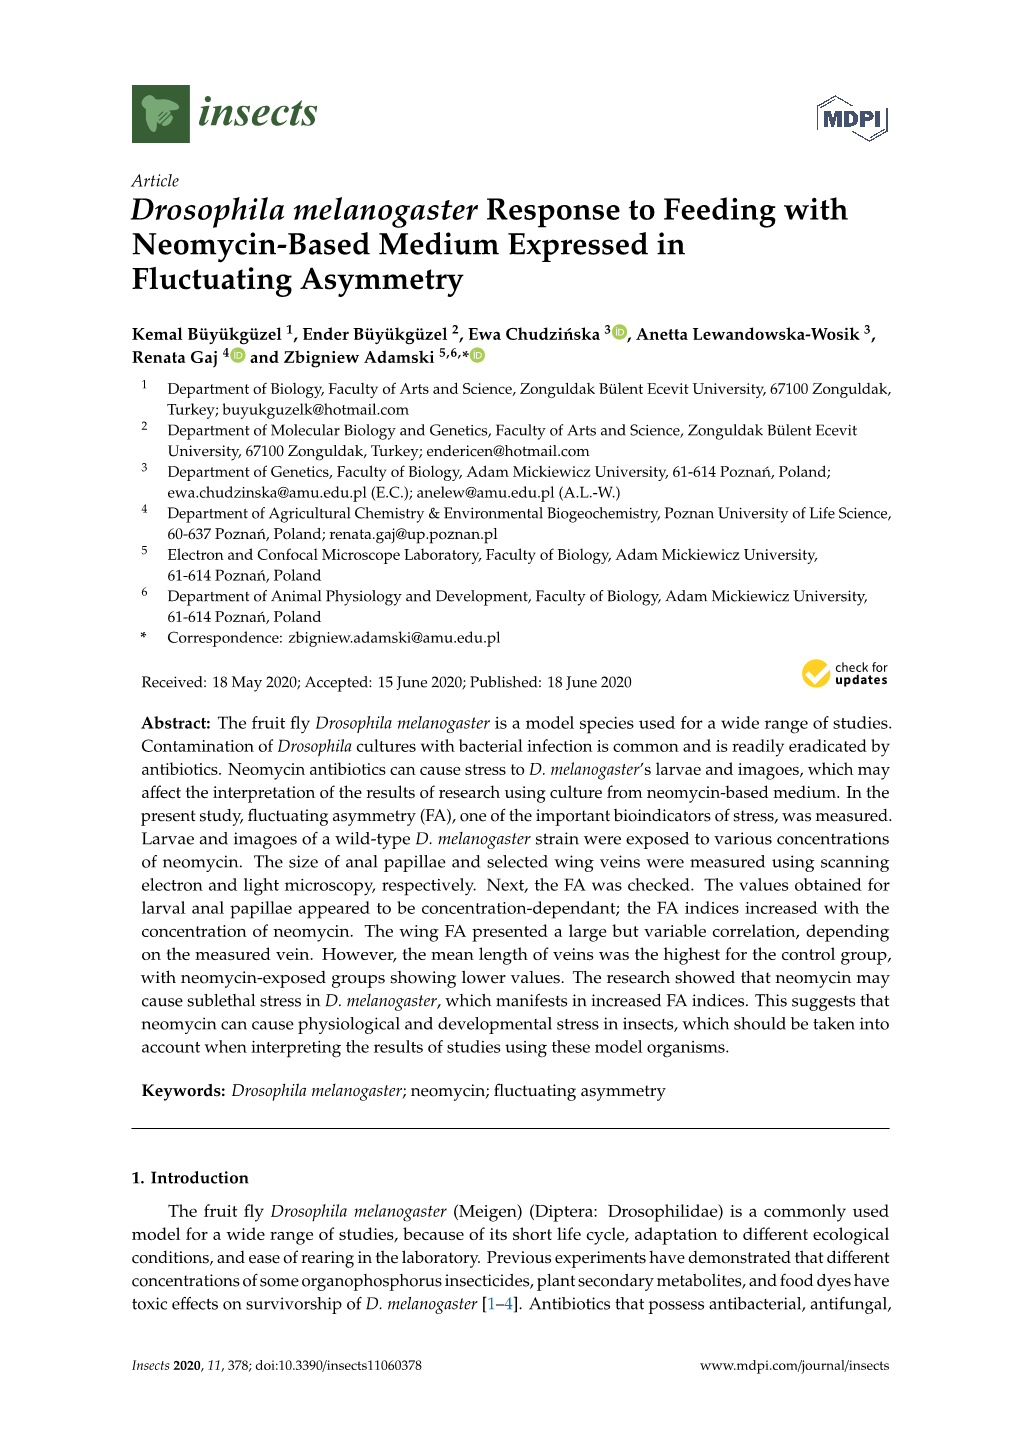 Drosophila Melanogaster Response to Feeding with Neomycin-Based Medium Expressed in Fluctuating Asymmetry